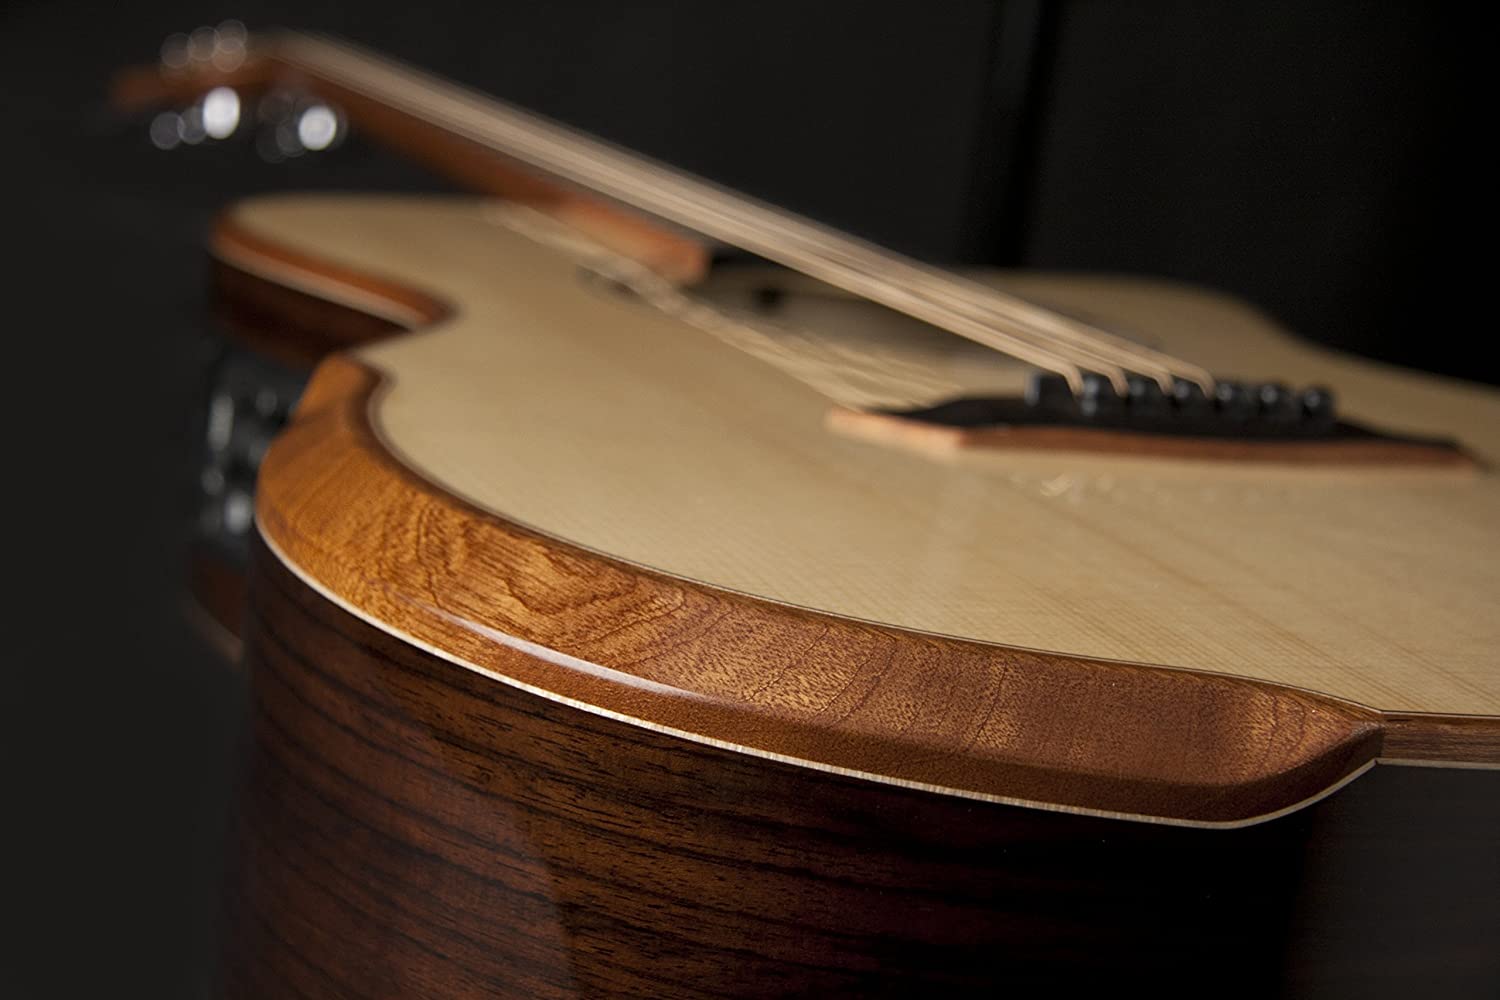 Washburn 6 String Acoustic Guitar